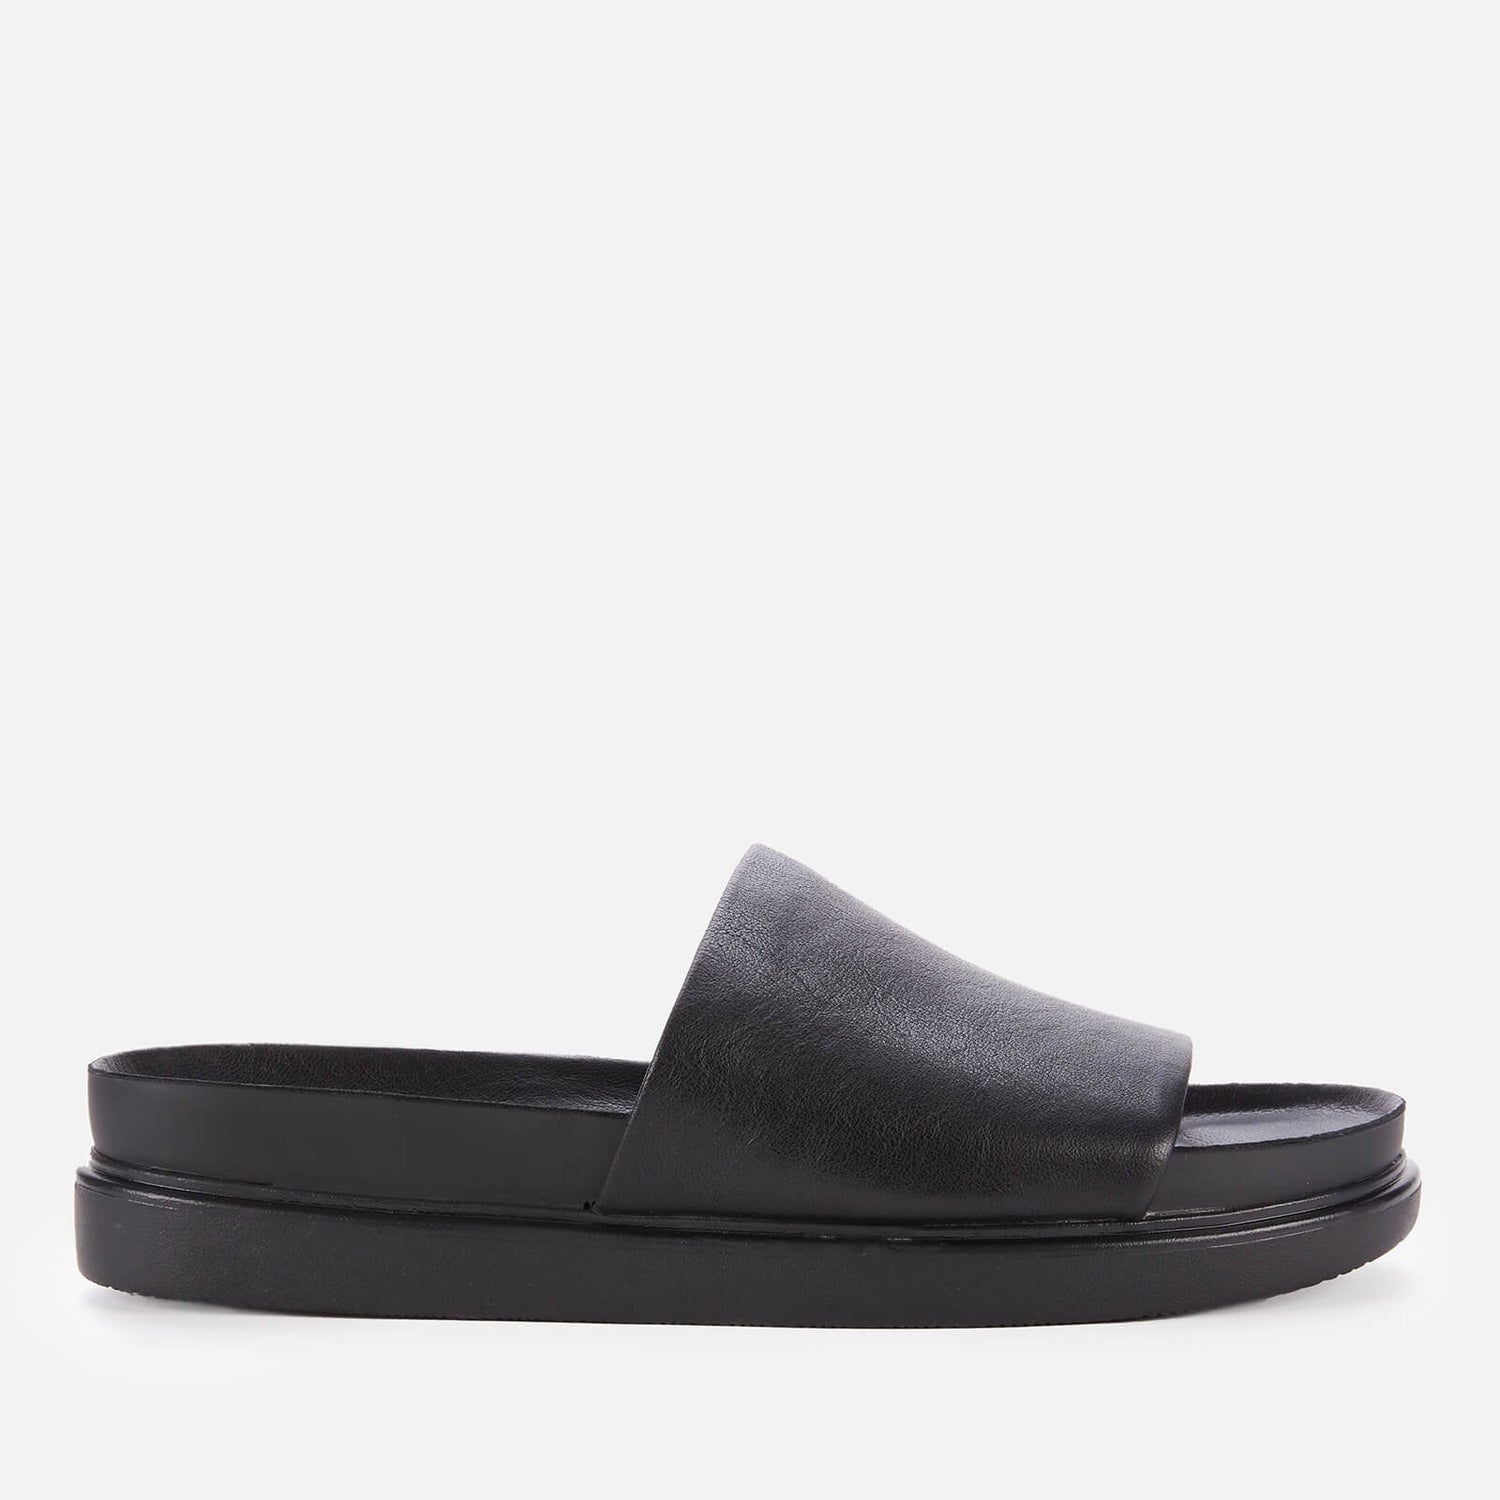 Vagabond Women's Erin Leather Slide Sandals - Black